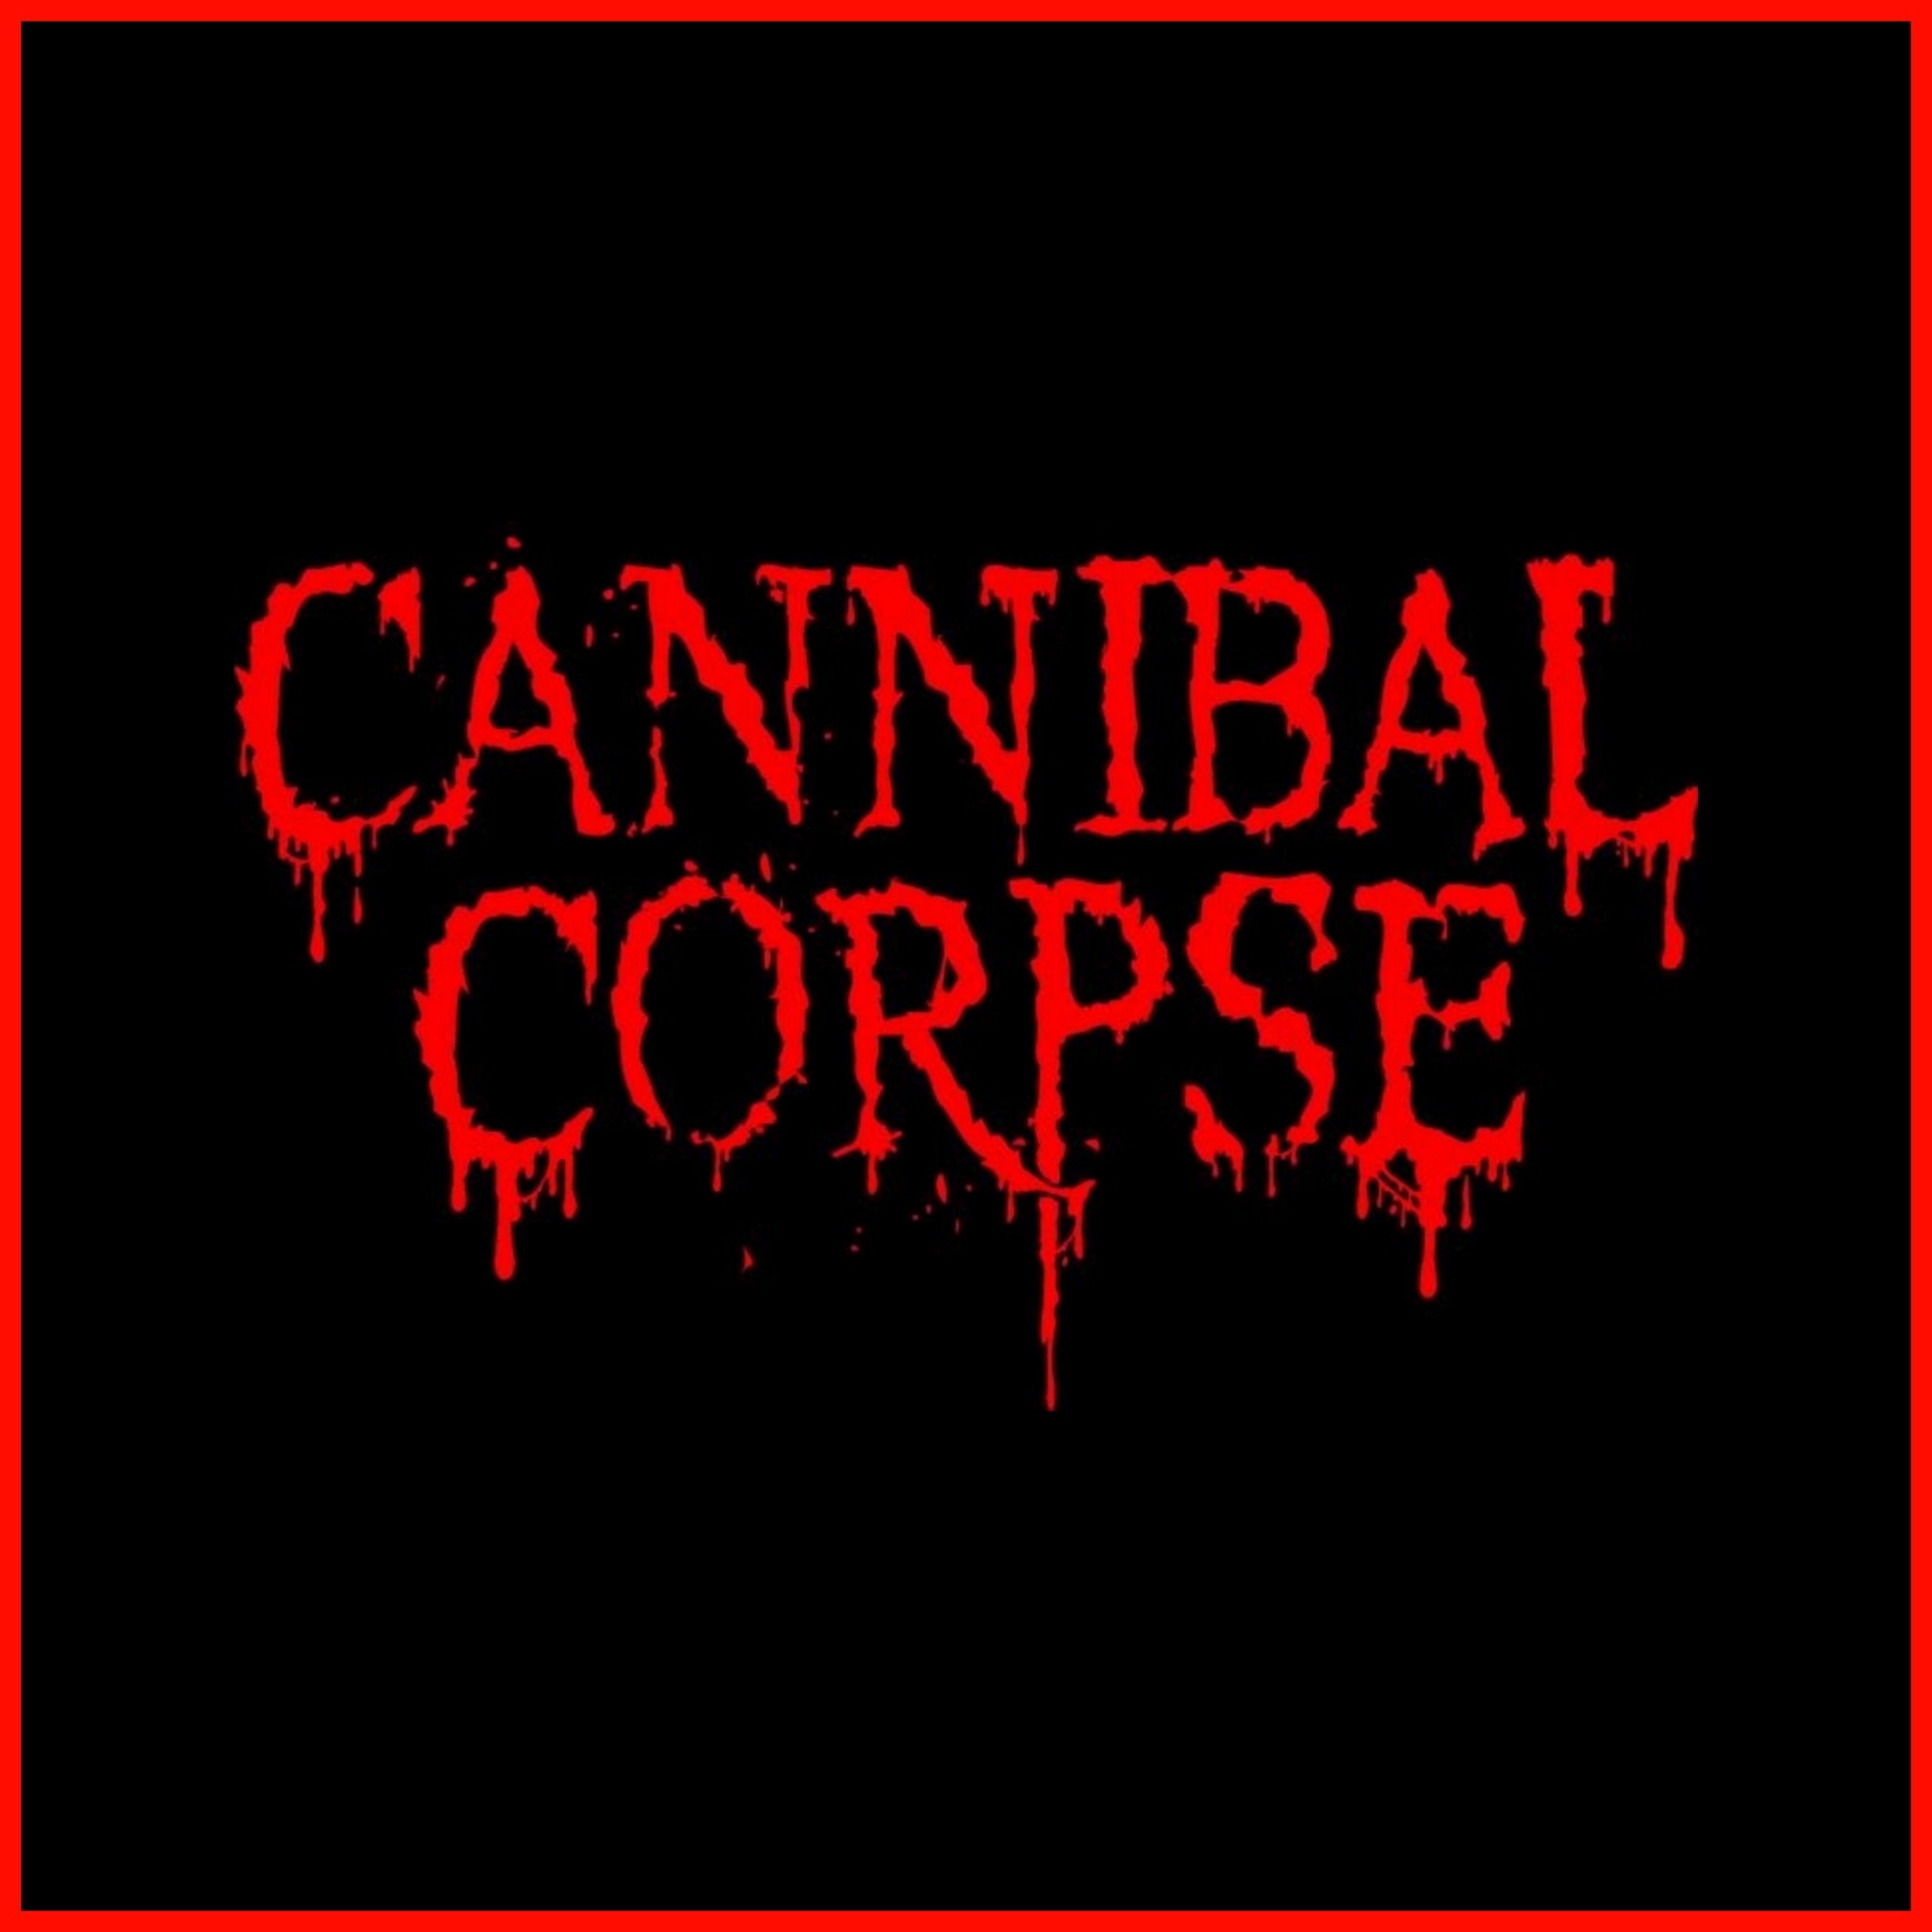 Cannibal corpse hammer. Группа Cannibal Corpse обложки. Каннибал Корпс надпись. Каннибал Корпс обложки.